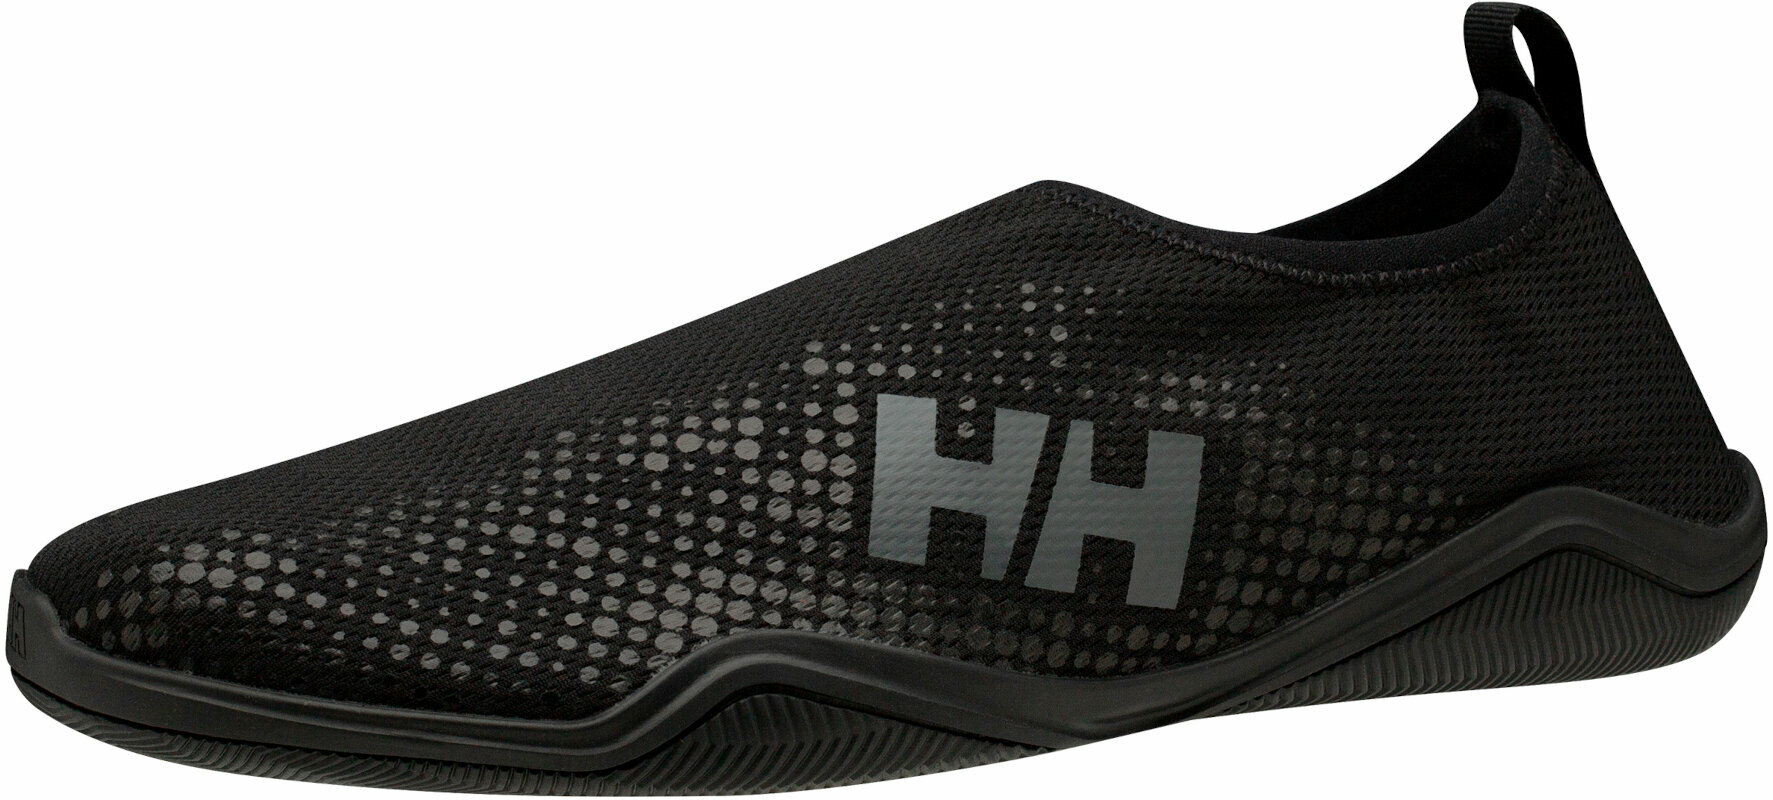 Mens Sailing Shoes Helly Hansen Men's Crest Watermoc Black/Charcoal 42,5